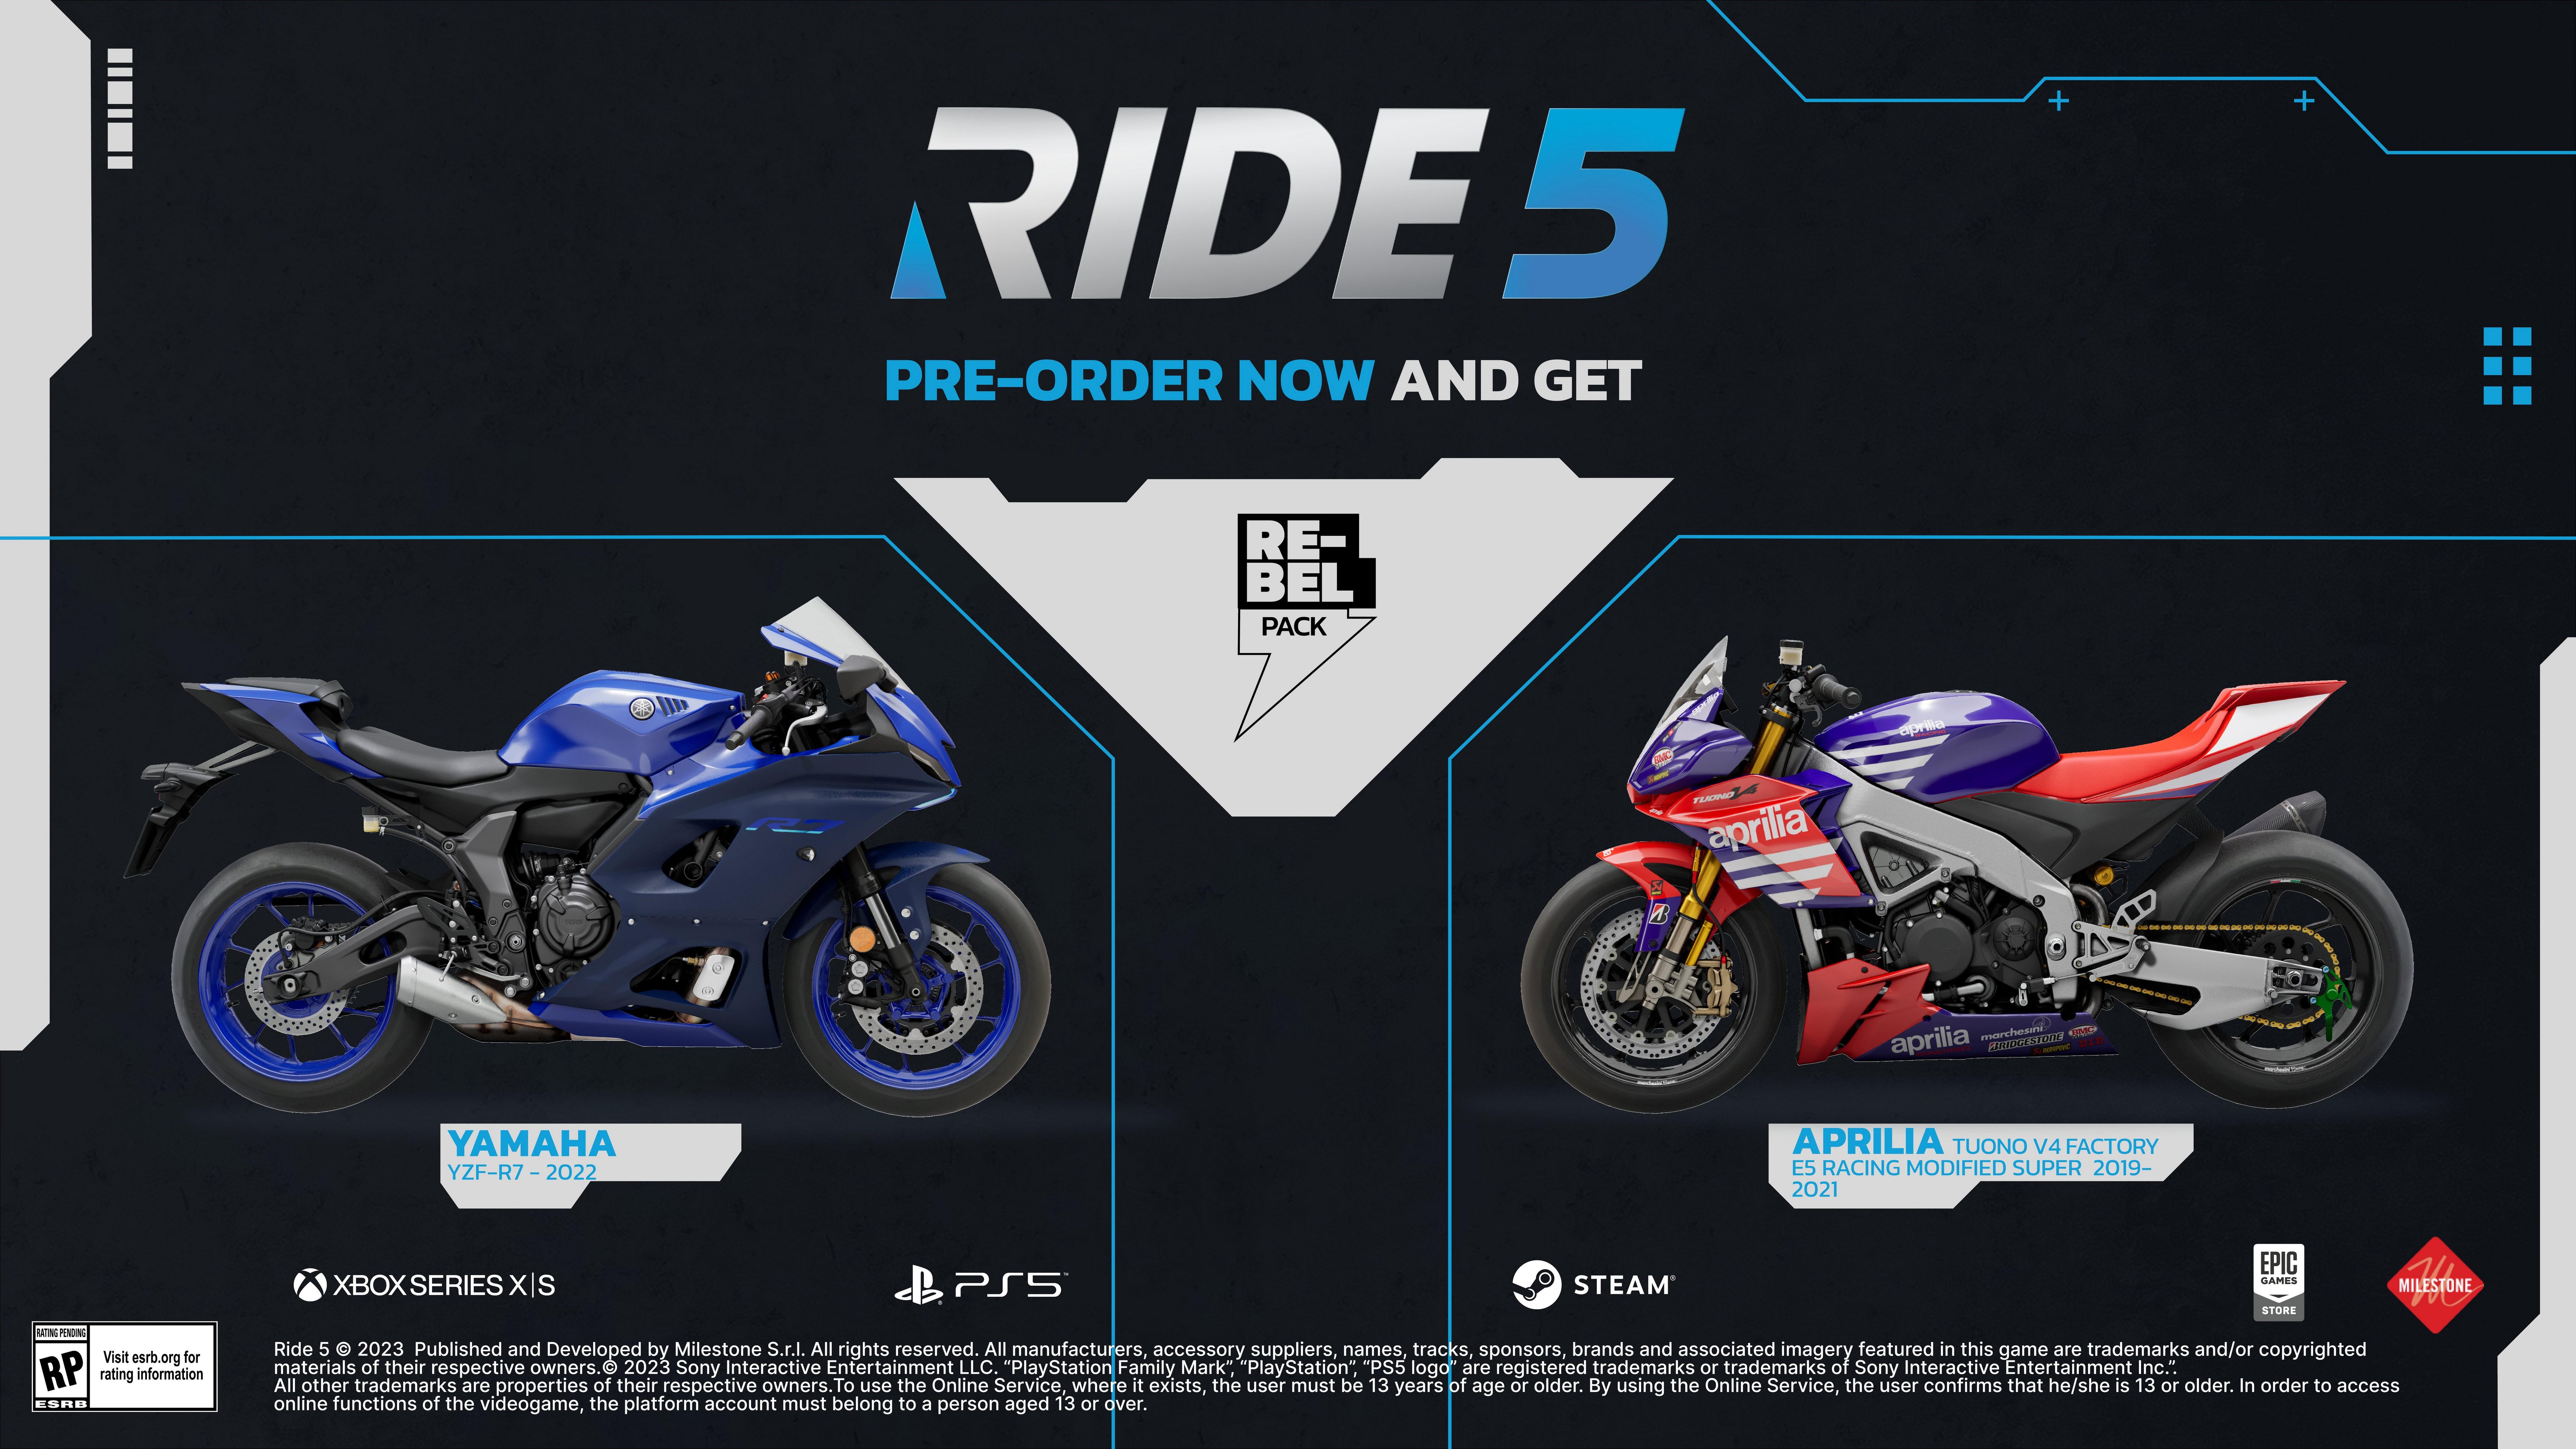 Ride 5 - Xbox Series X